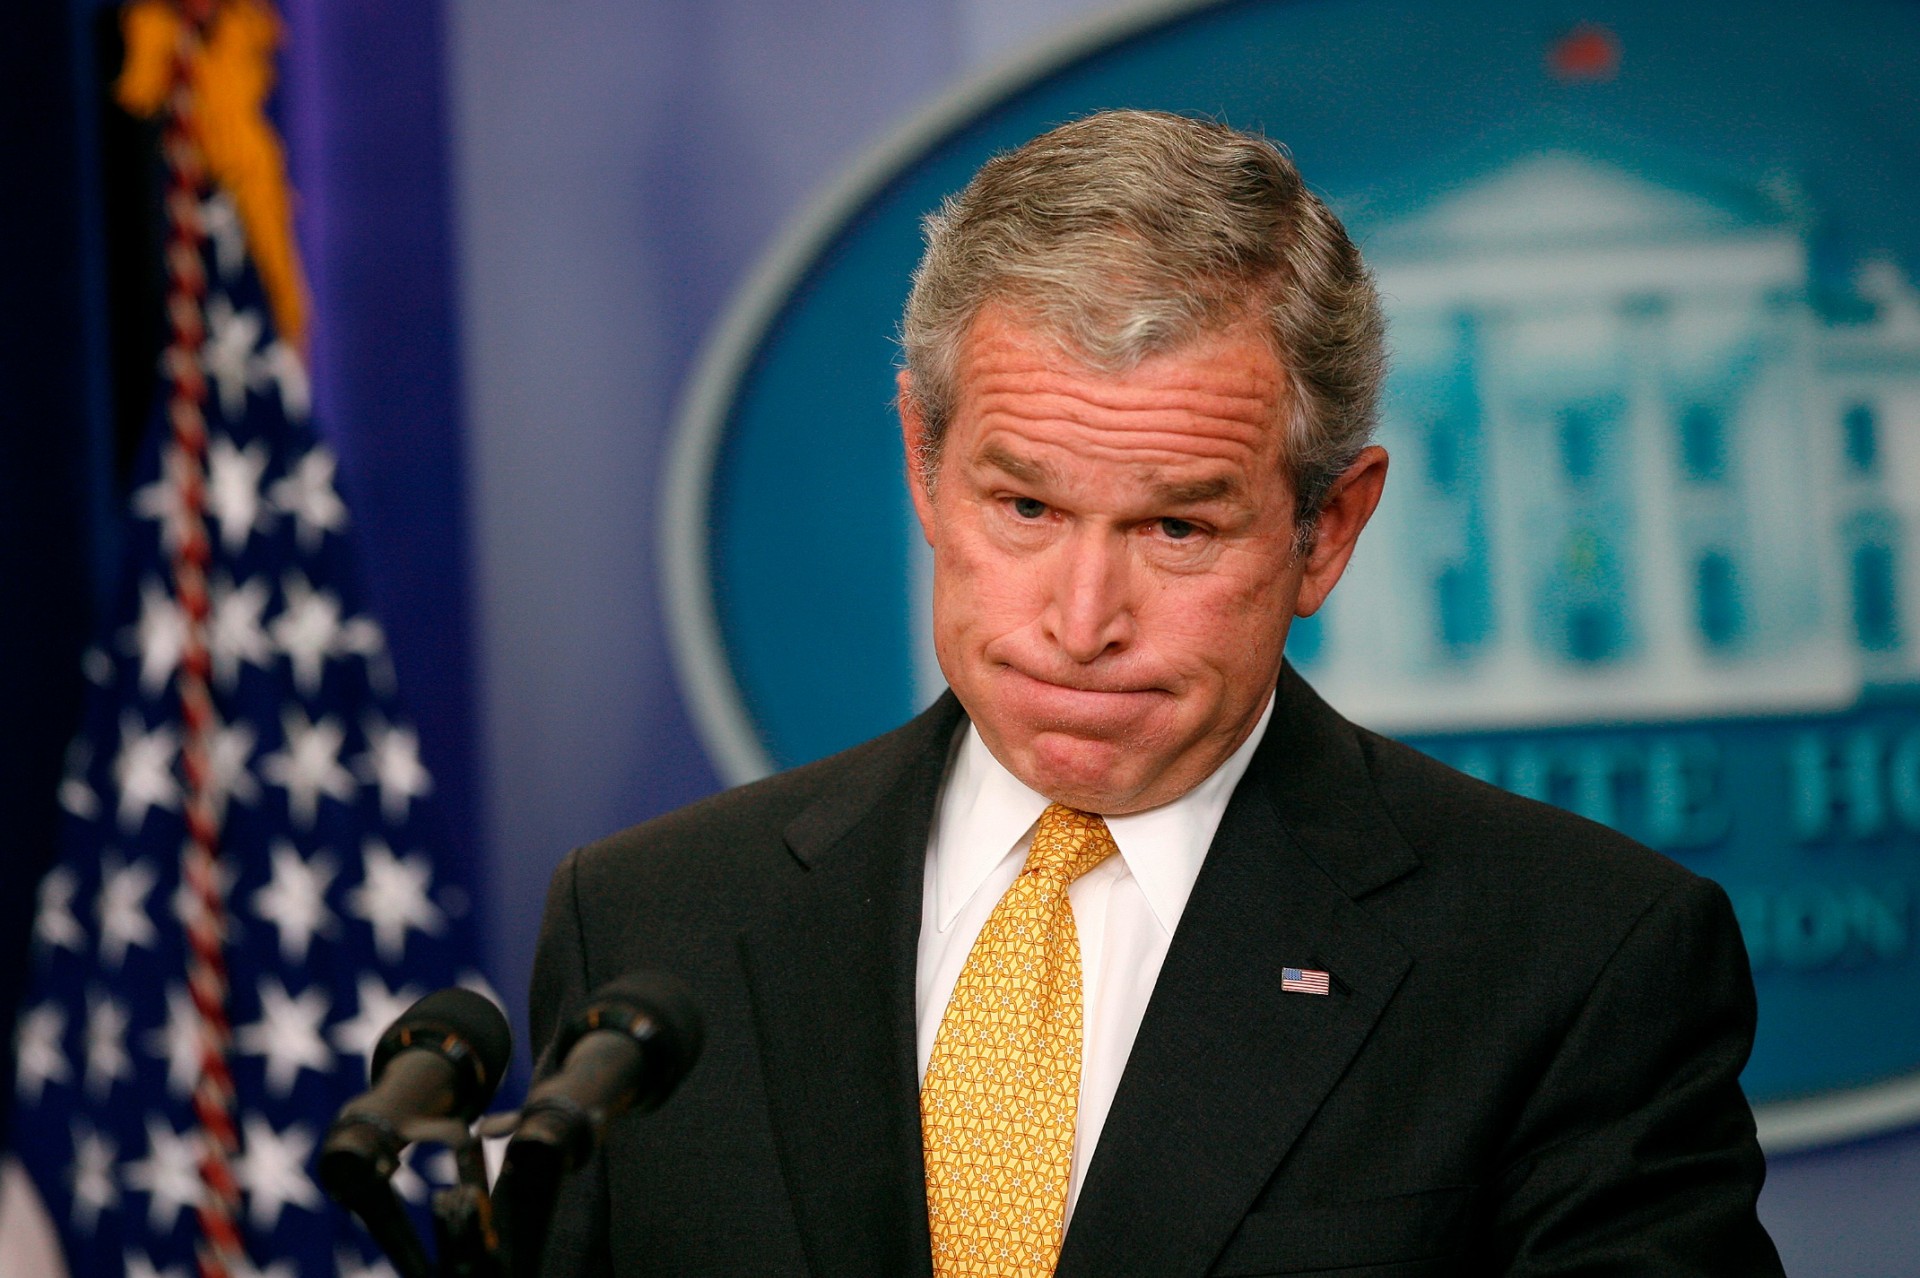 George Bush Funny Face Image